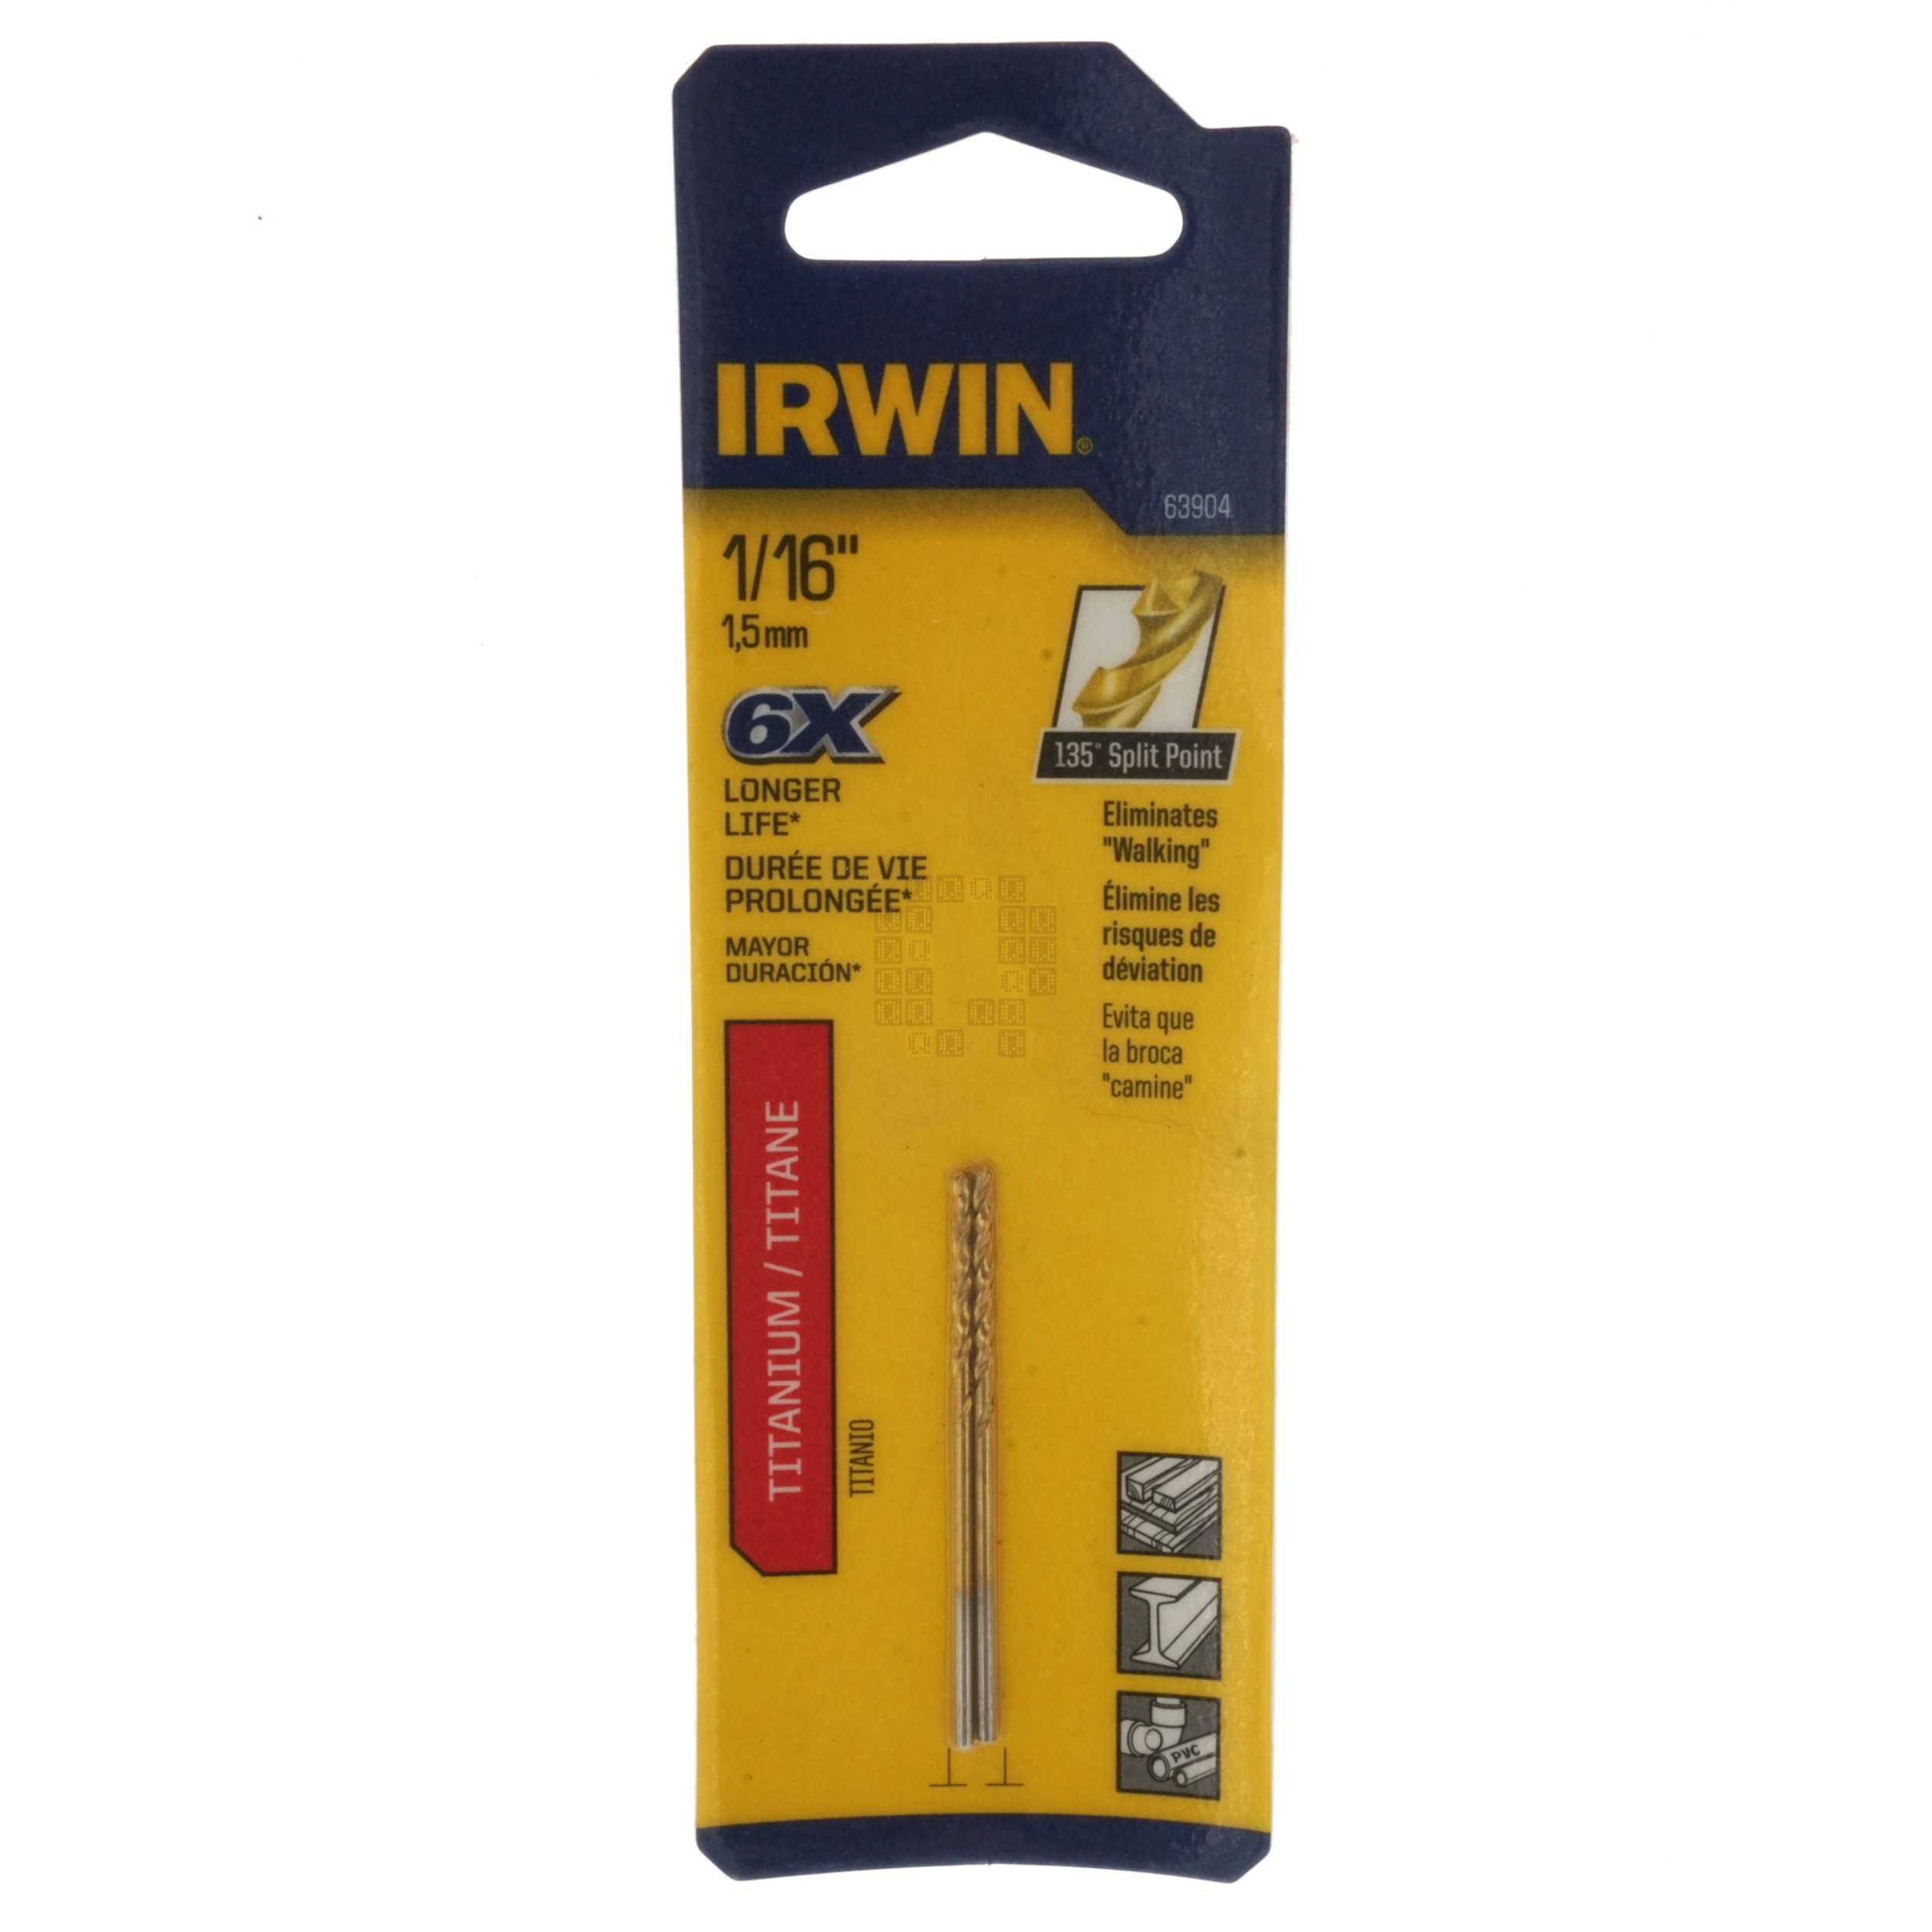 Irwin 63904 1/16" Titanium Coated 135° Split Point Drill Bit, 2-Pack